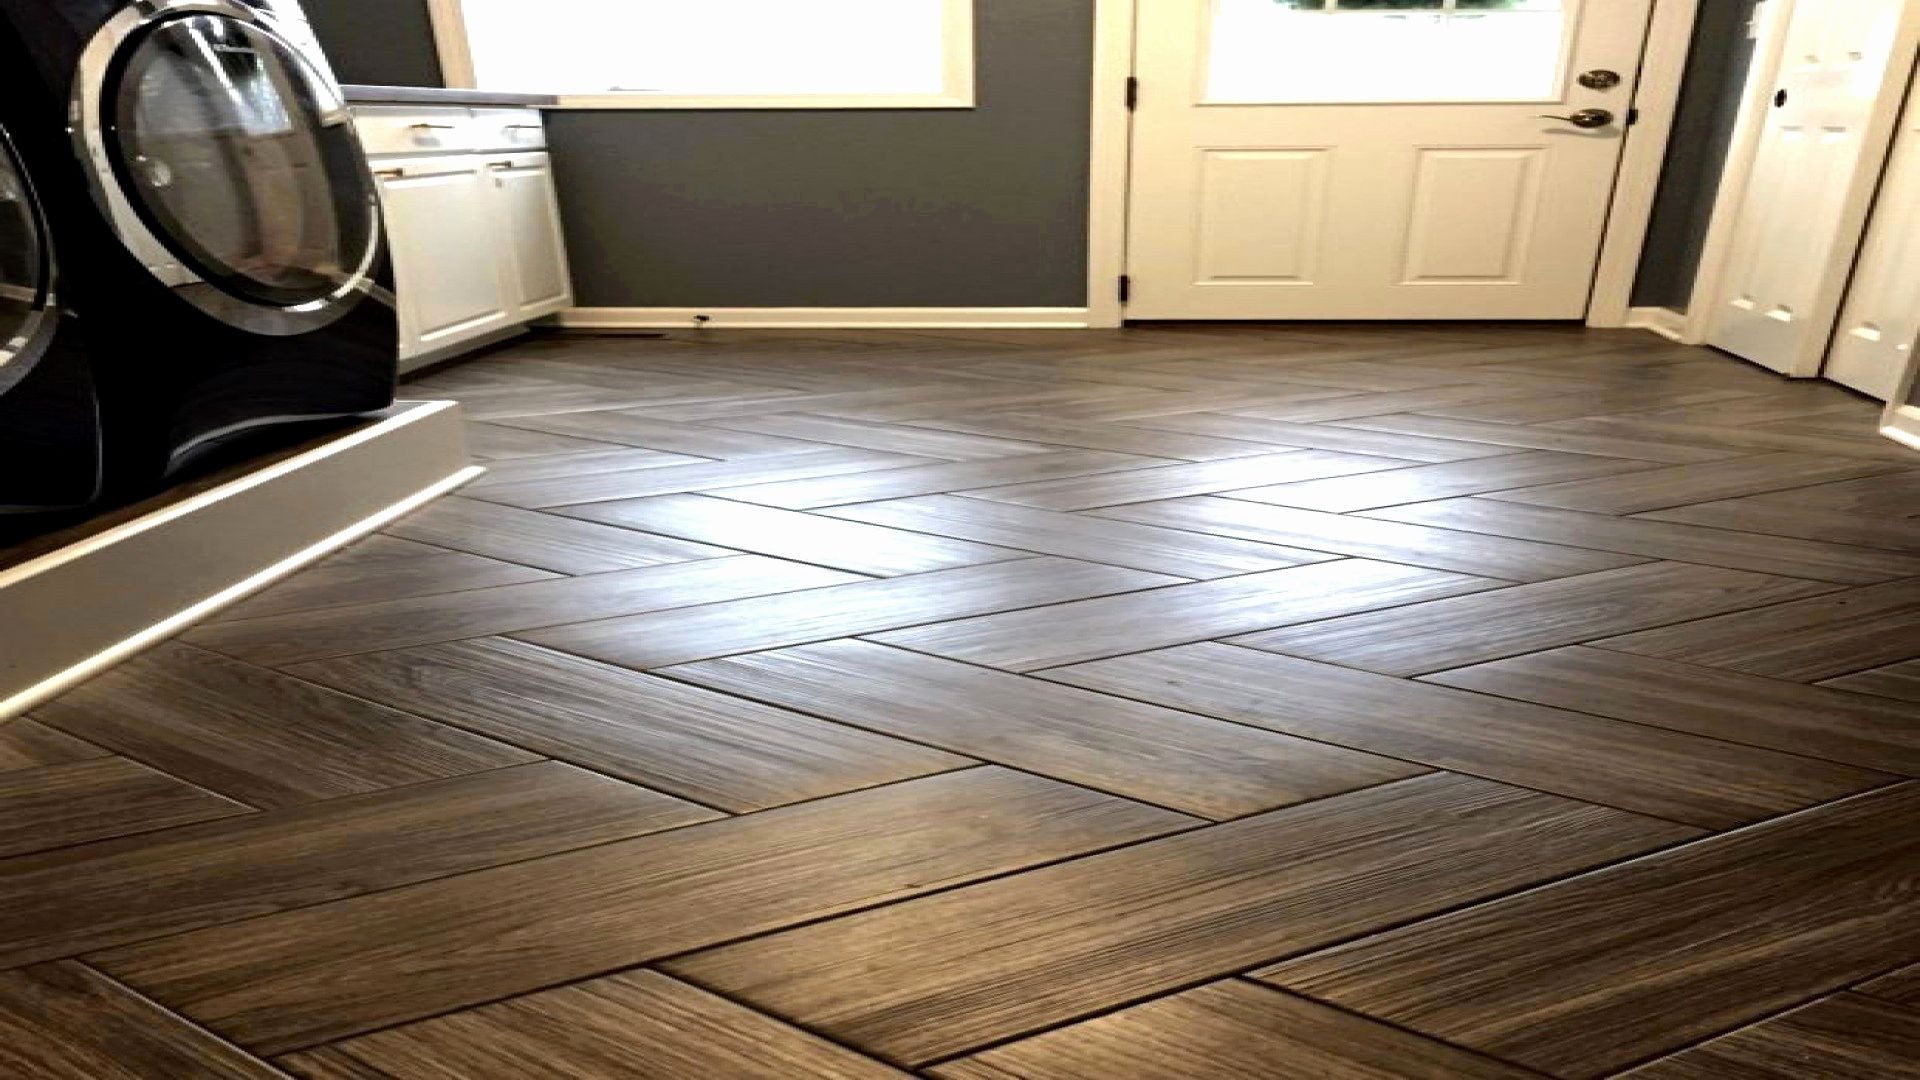 golden hickory hardwood flooring of wood flooring cost floor plan ideas inside kitchen floor tiles home depot elegant s media cache ak0 pinimg 736x 43 0d 97 best